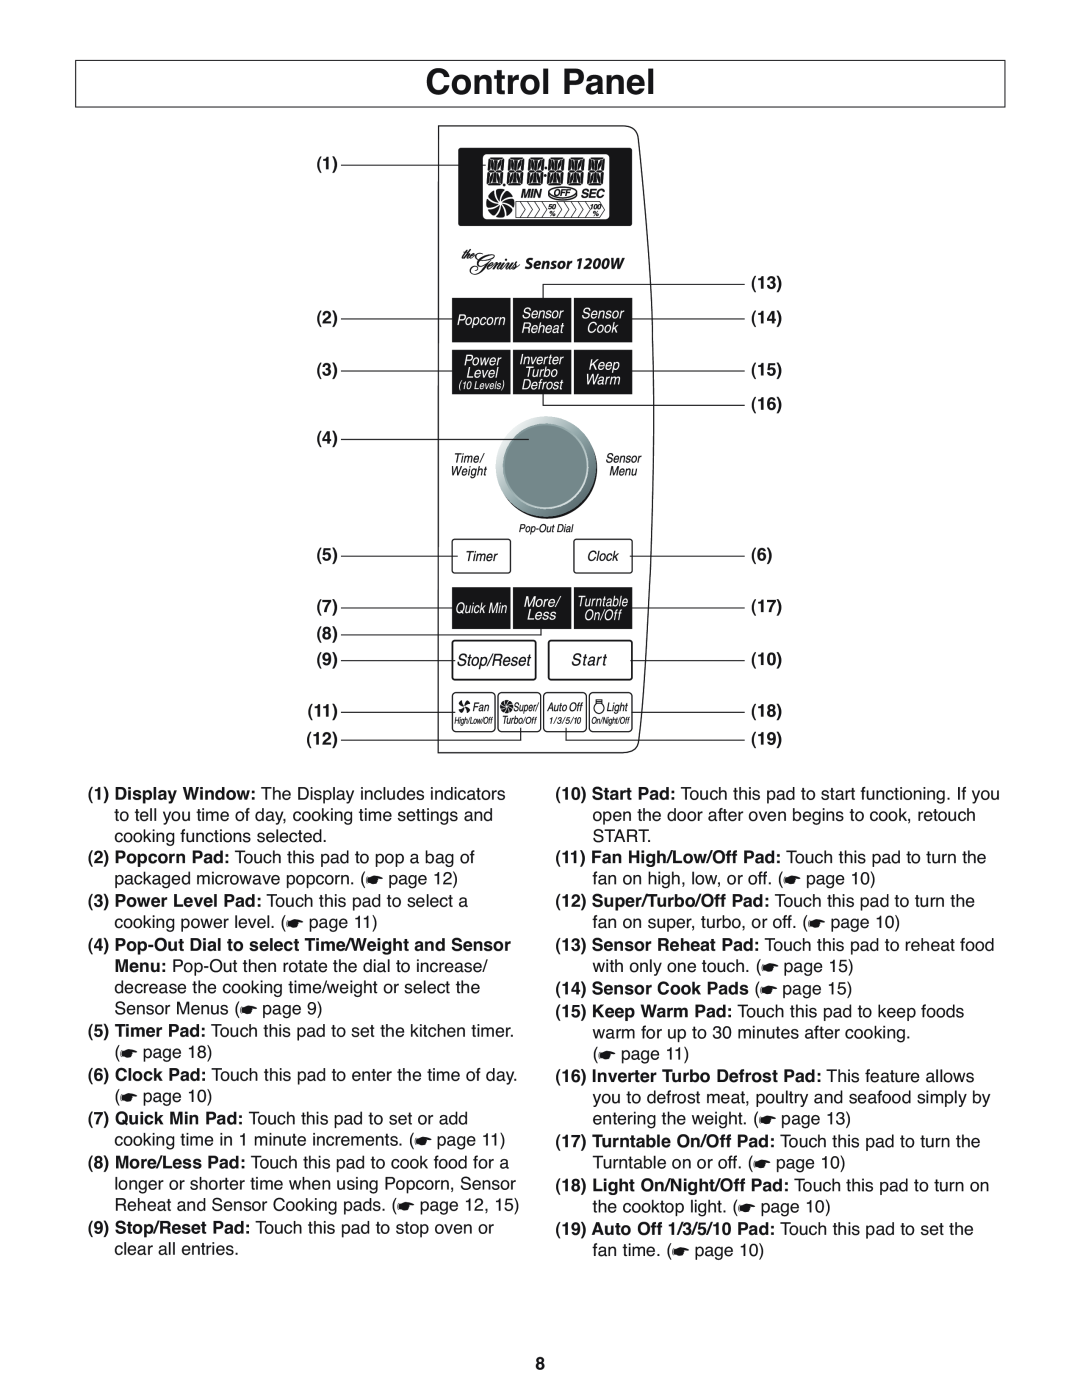 Panasonic NN-H275 operating instructions Control Panel 